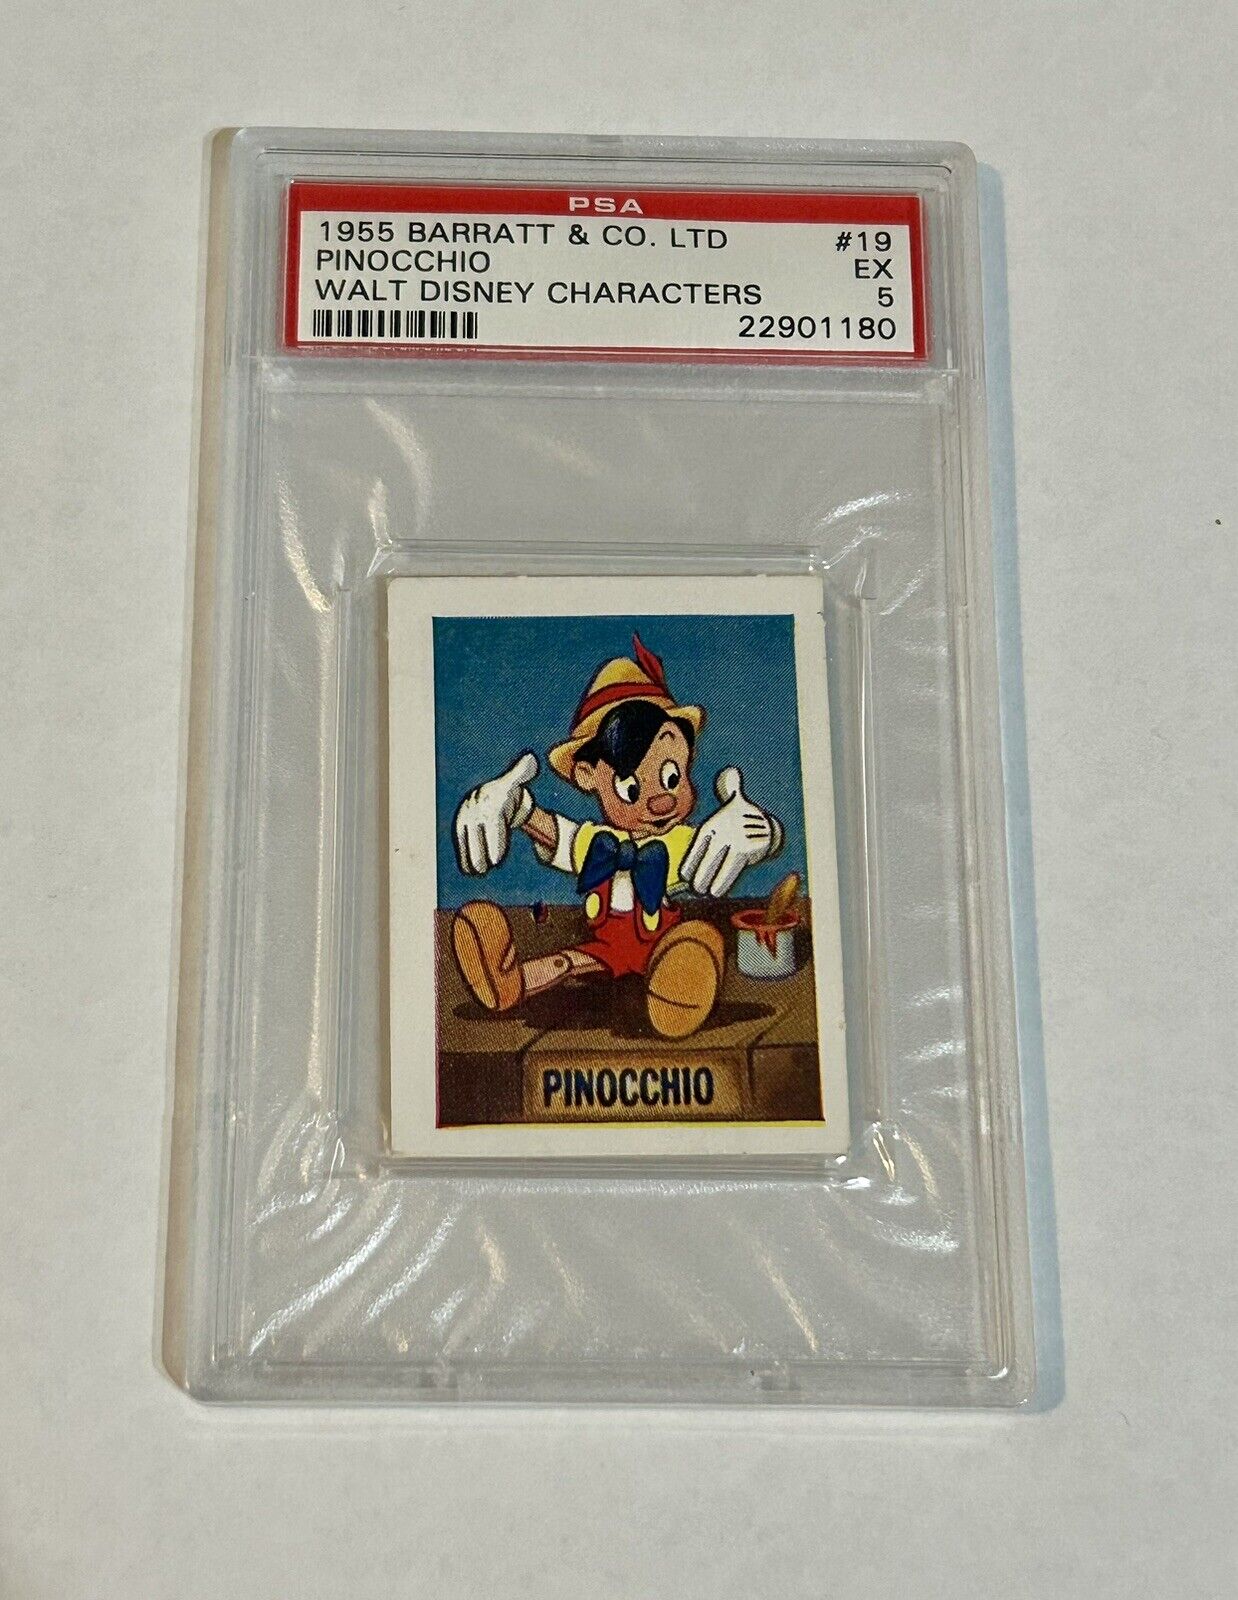 1955 Barratt & Co Pinocchio Walt Disney Tobacco Card - #19 - PSA 5 EX Rare